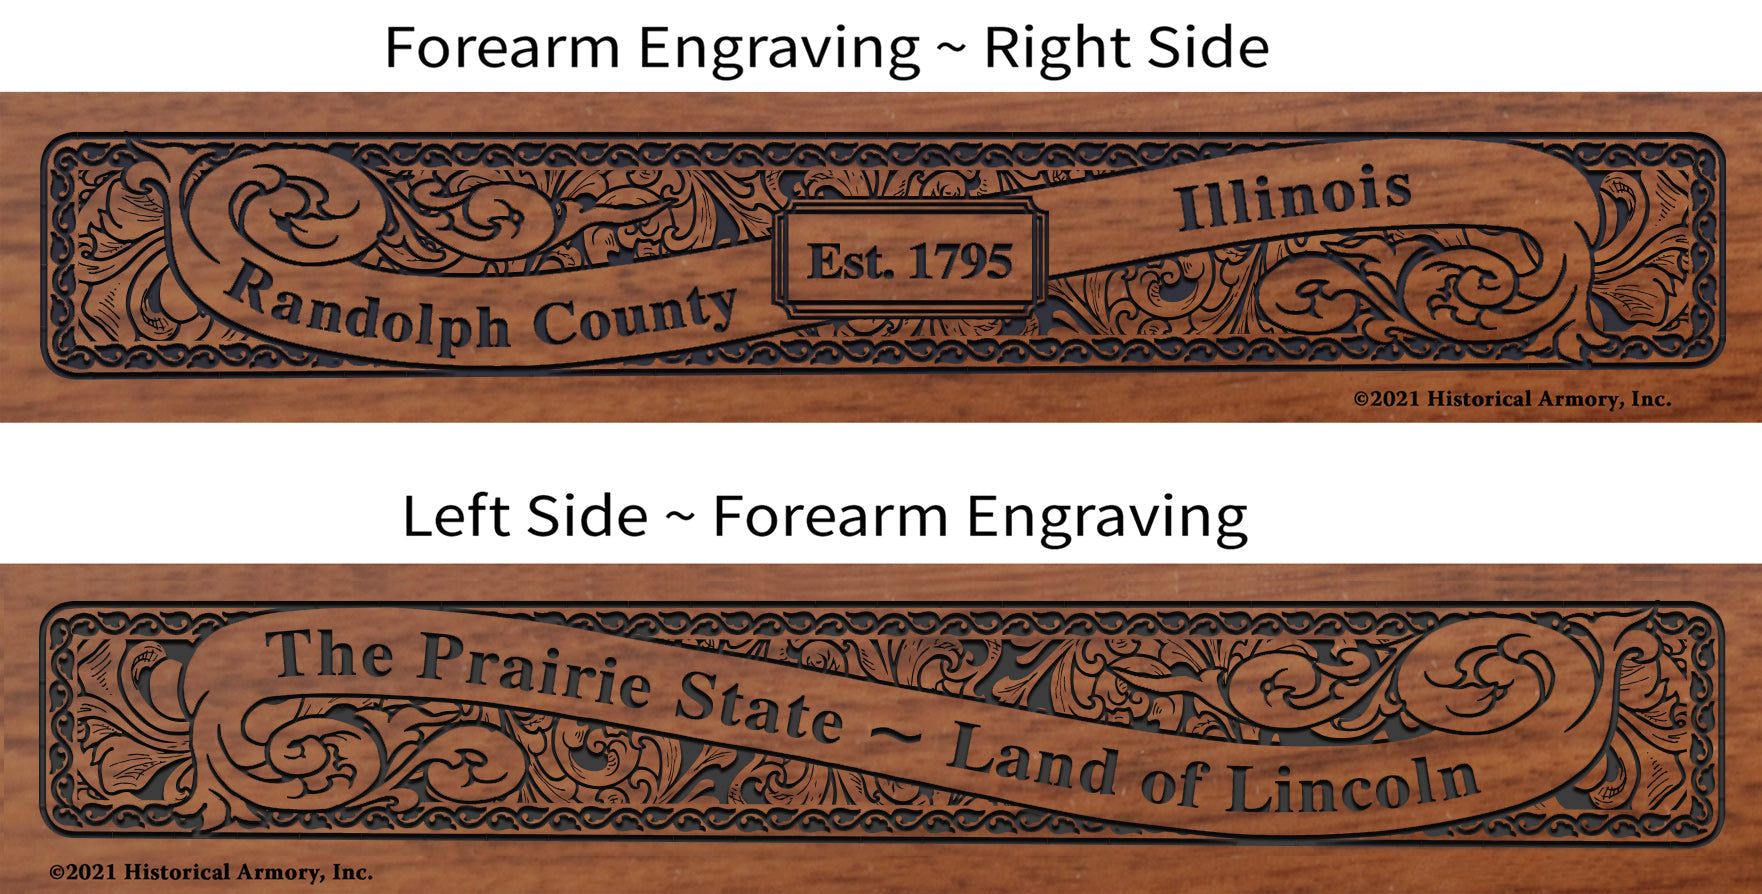 Randolph County Illinois Establishment and Motto History Engraved Rifle Forearm